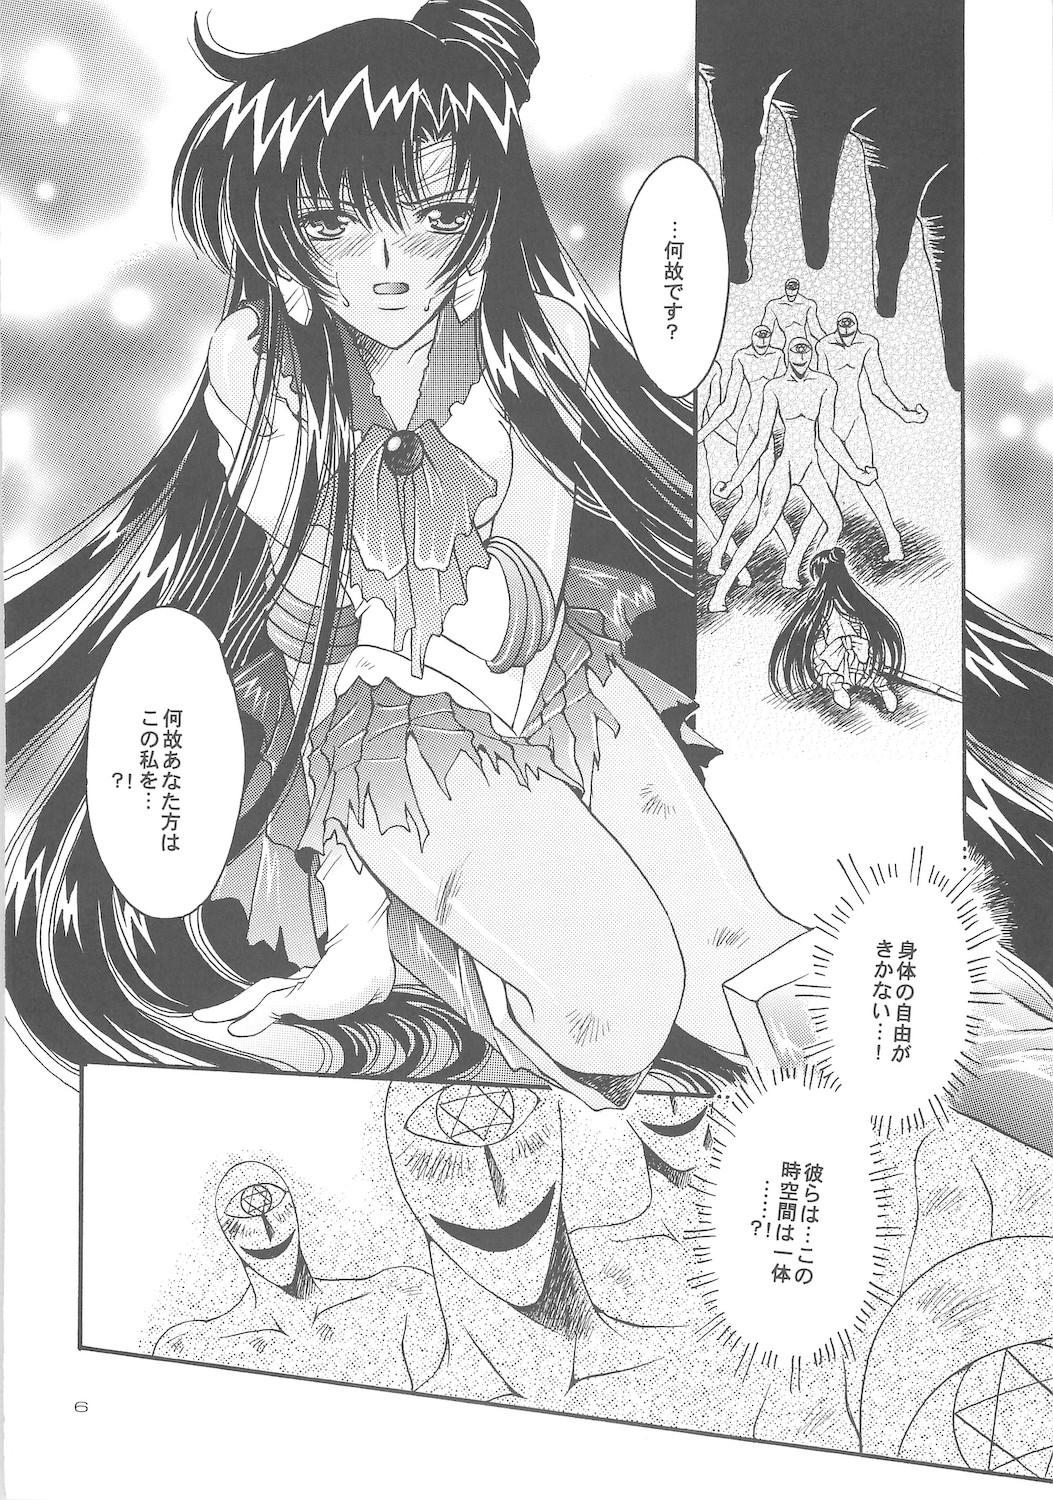 Spread Owaru Sekai dai 4 shou - Sailor moon Studs - Page 6